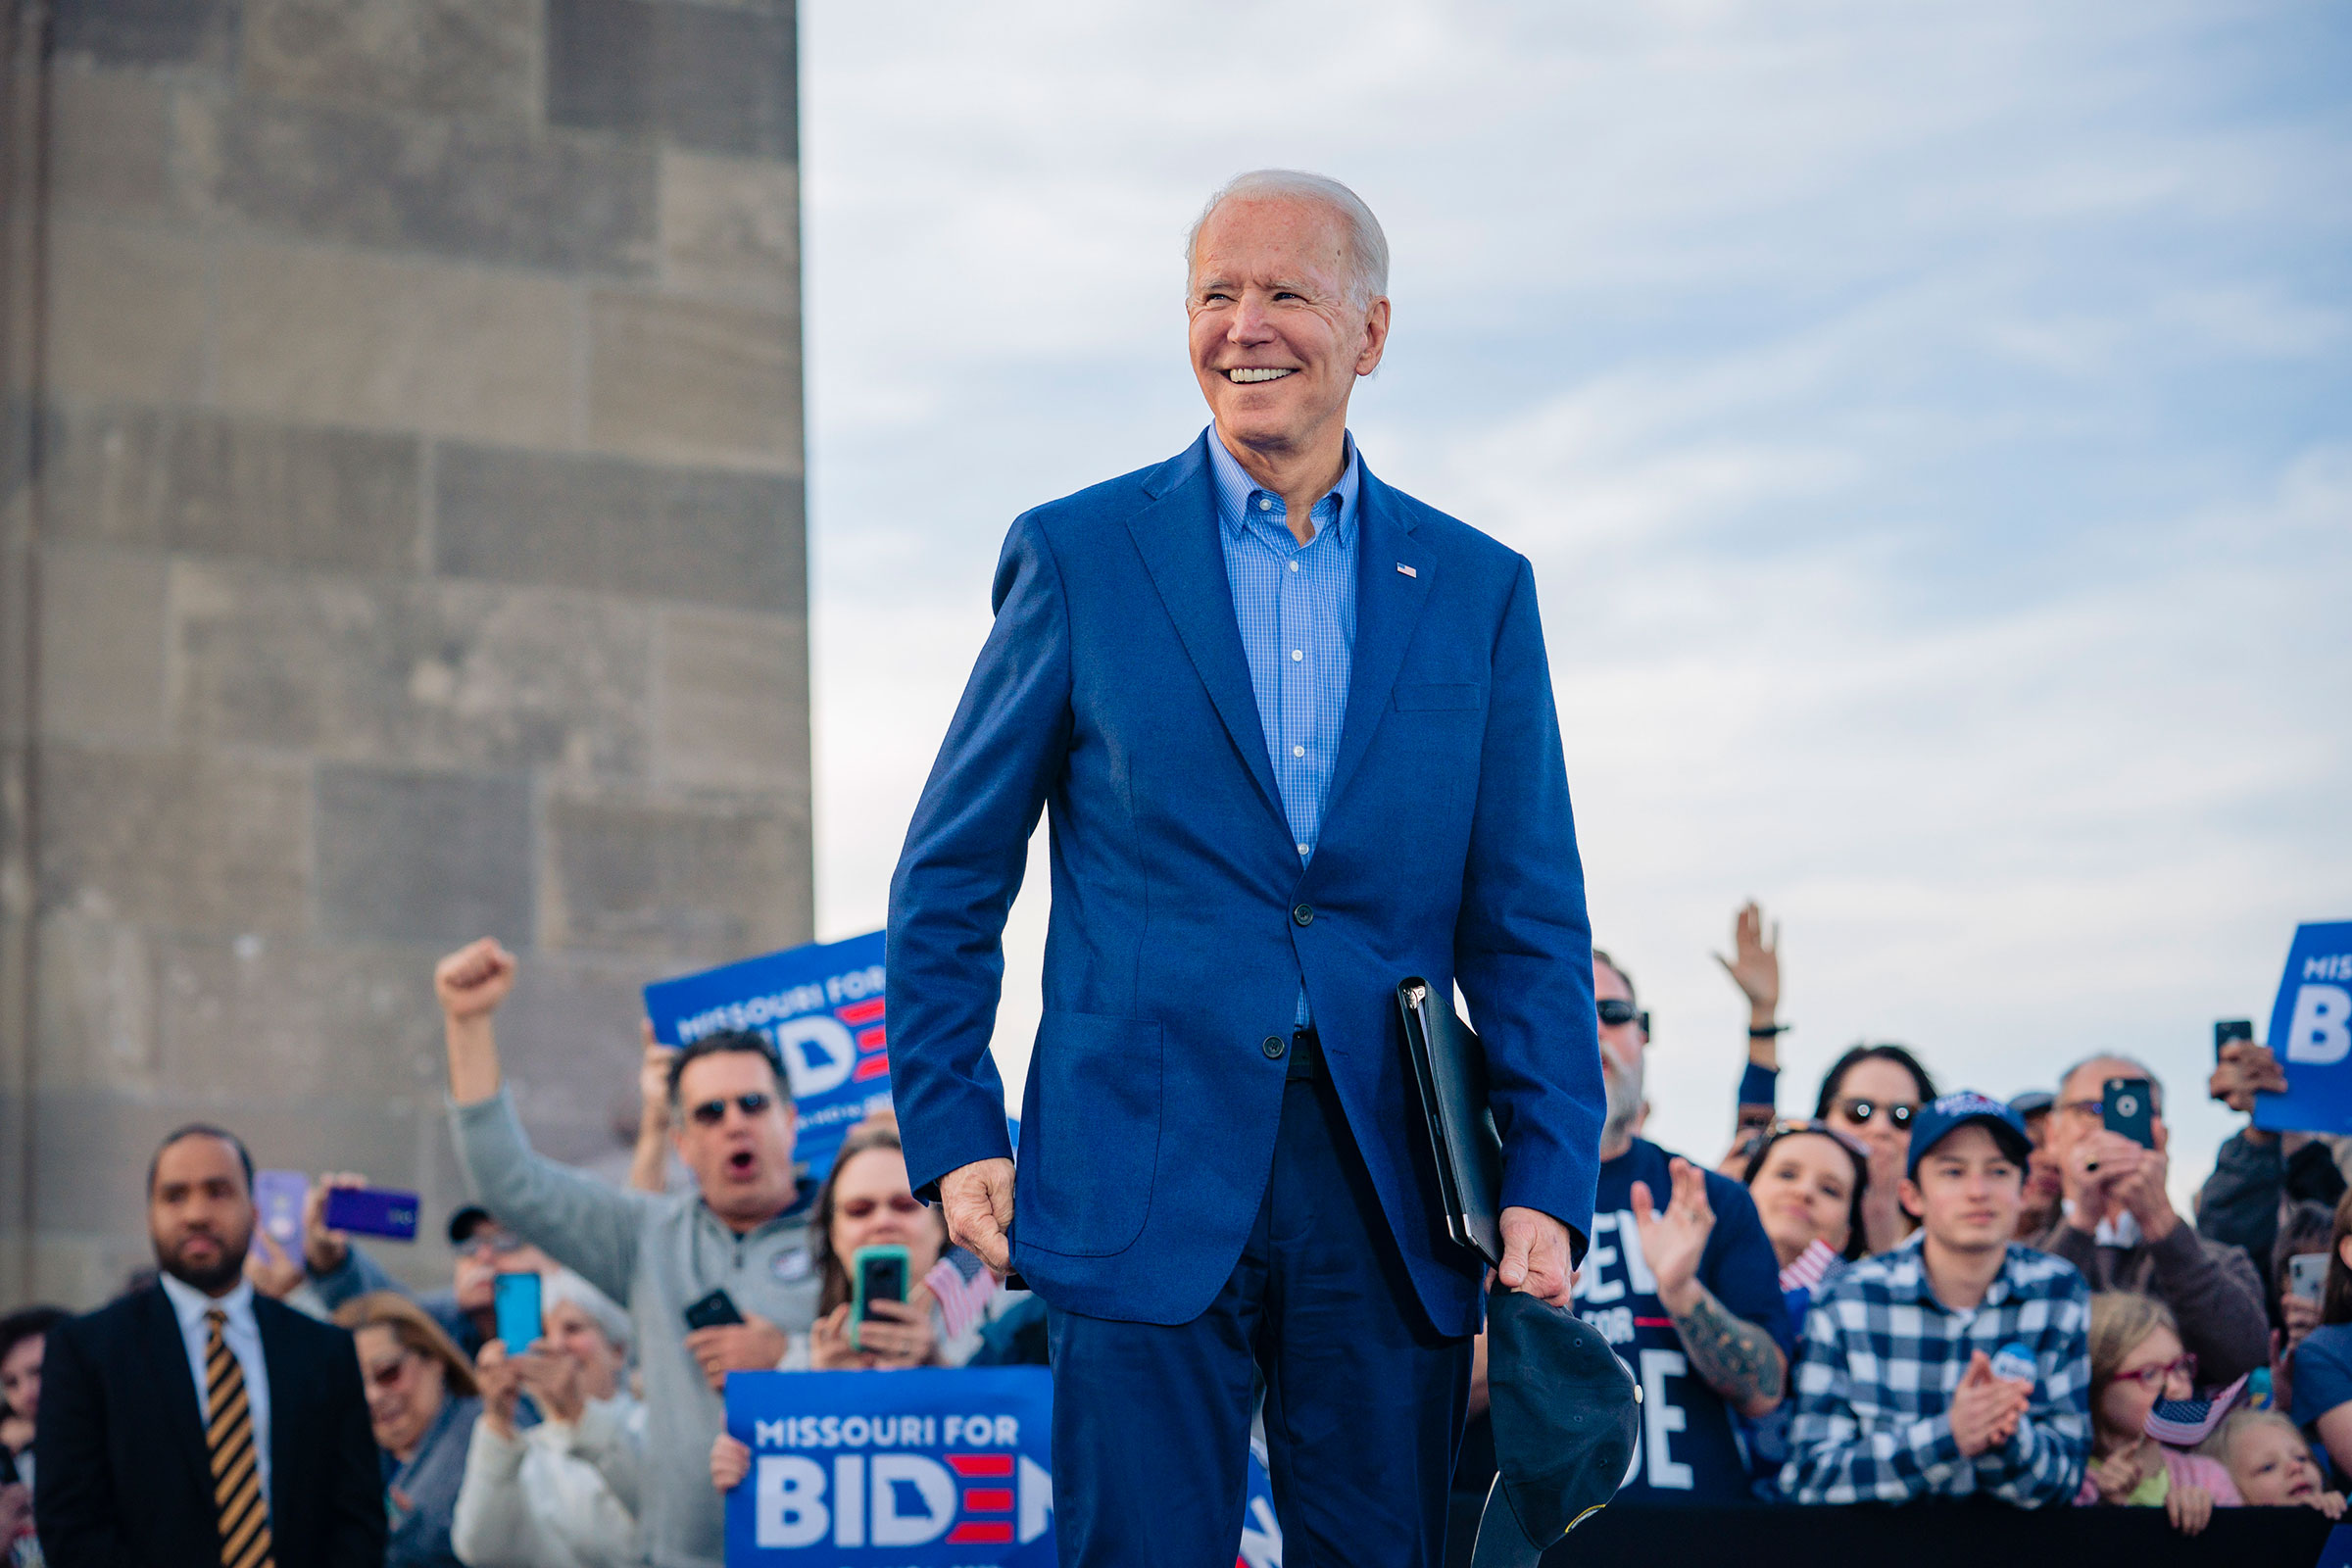 TIME 100 Leaders: Joe Biden